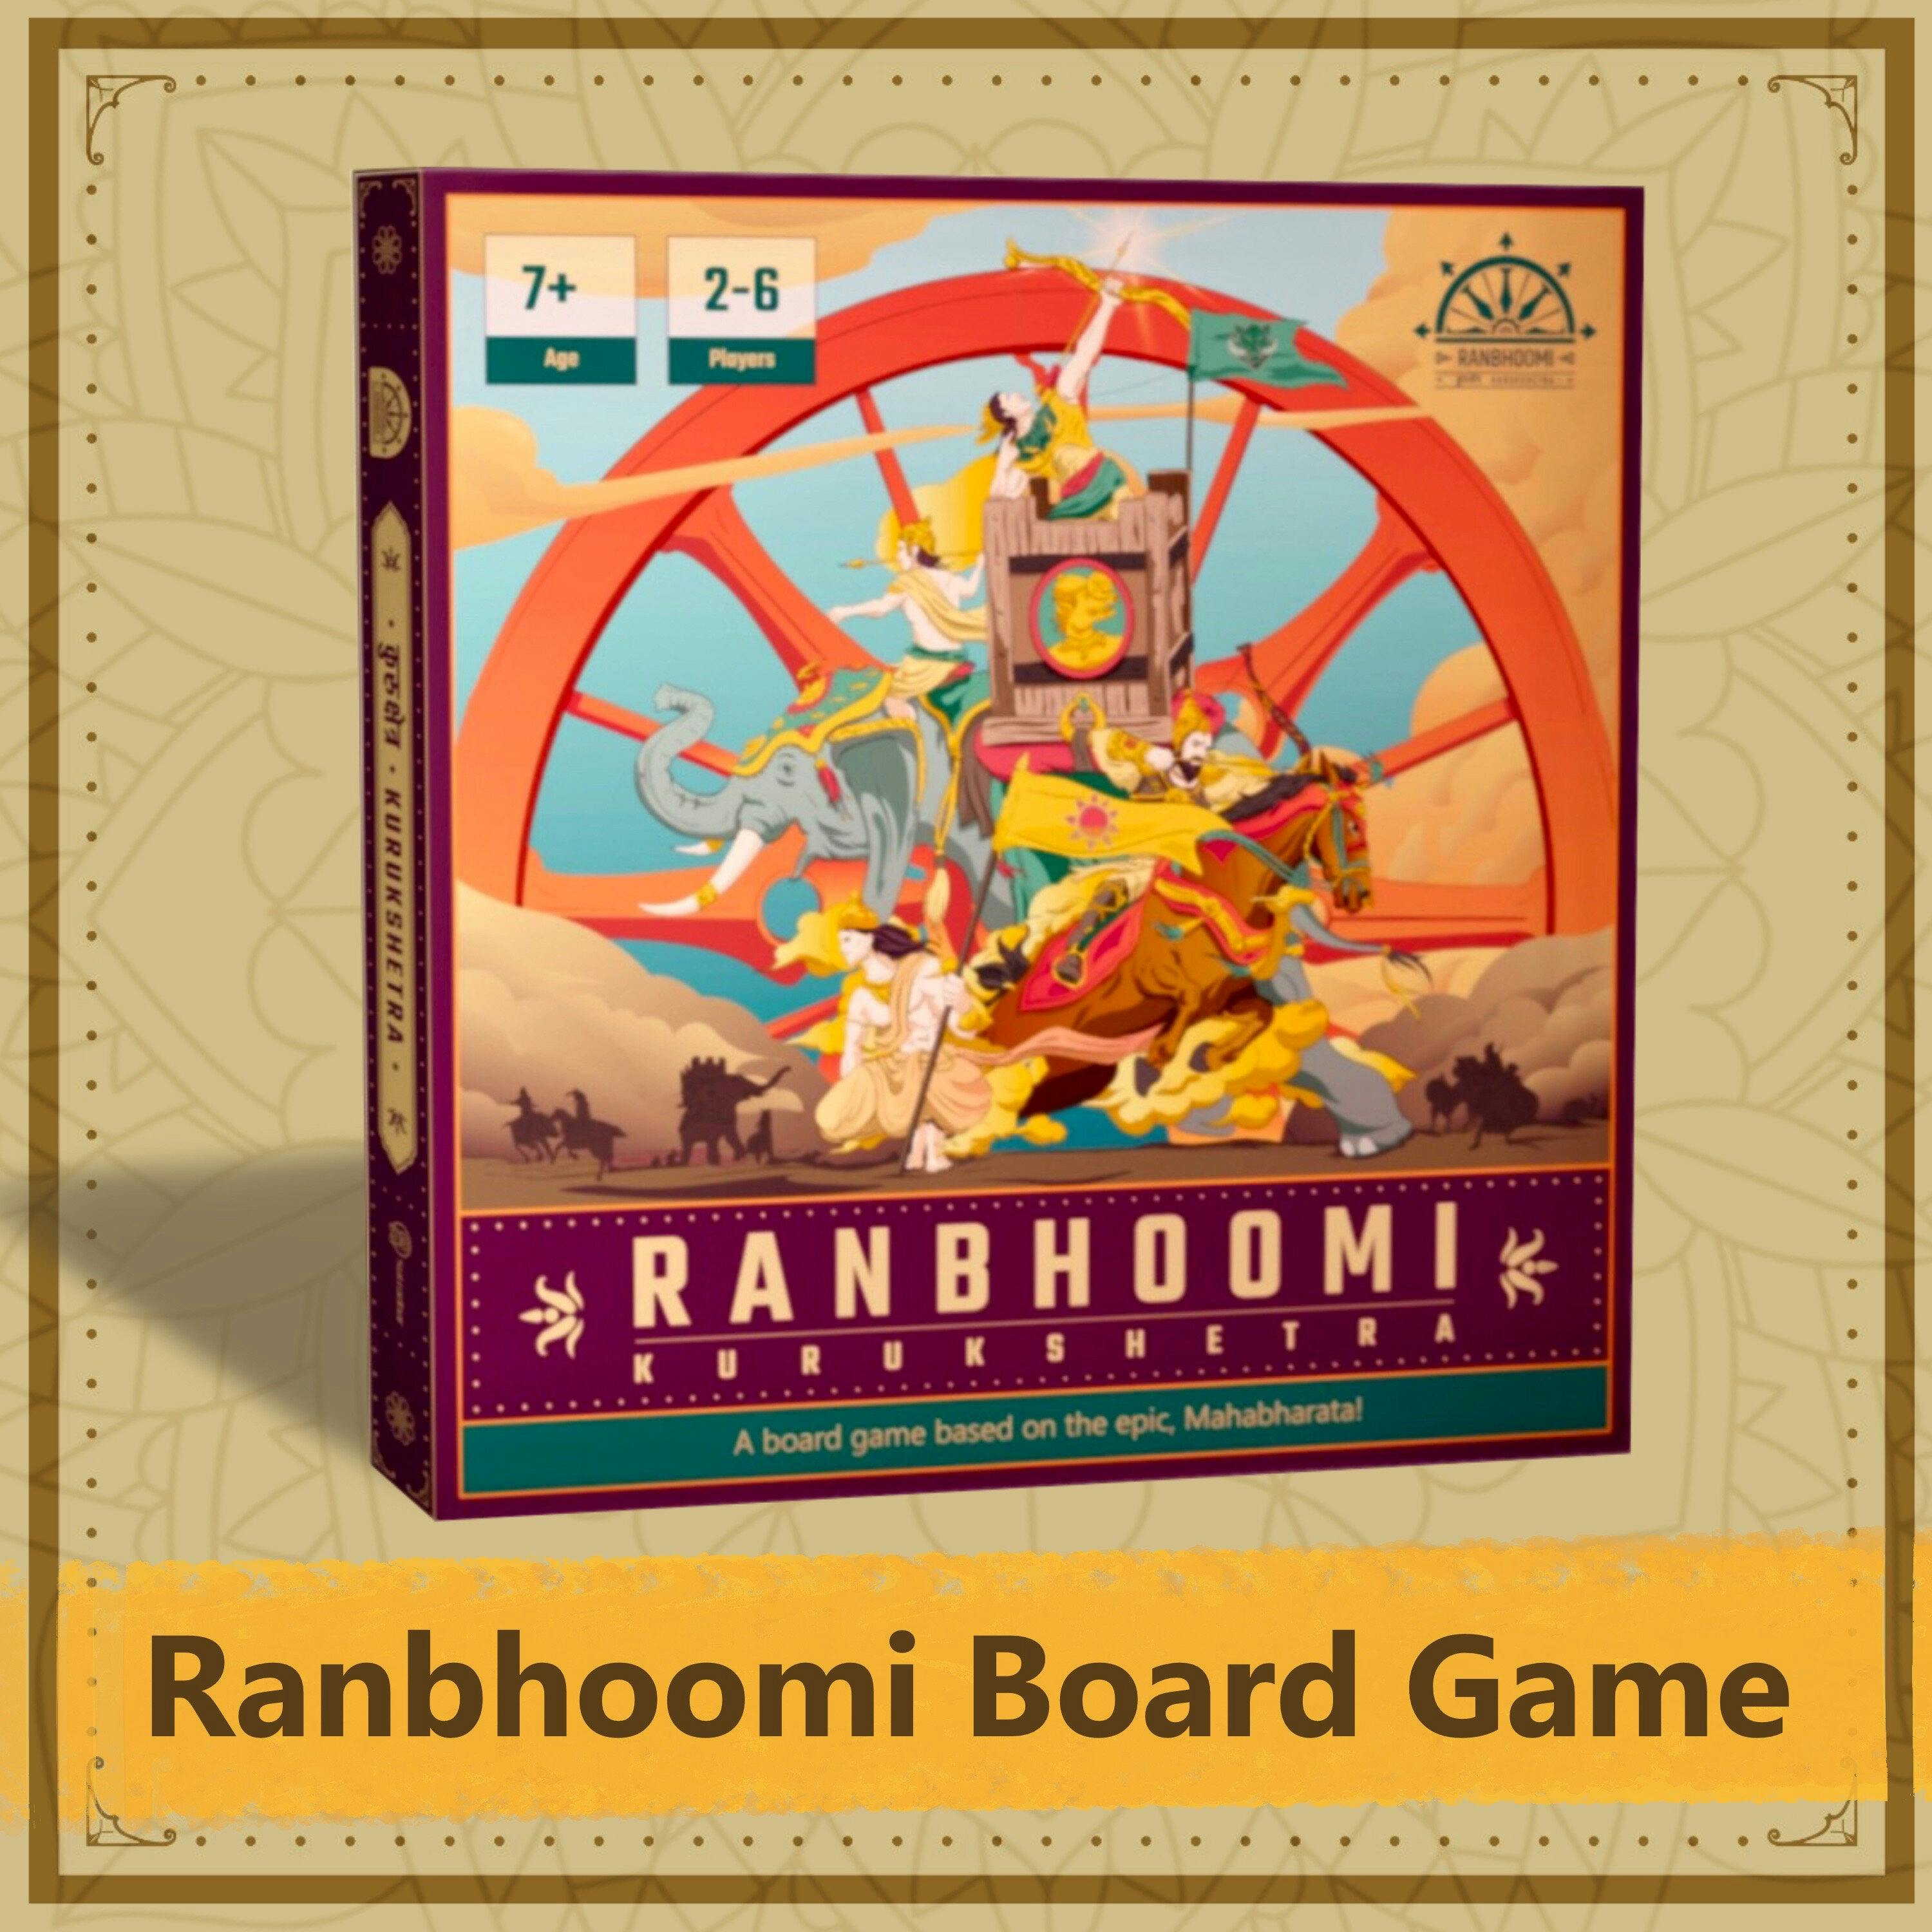 All about Ranbhoomi - Kurukshetra Boardgame